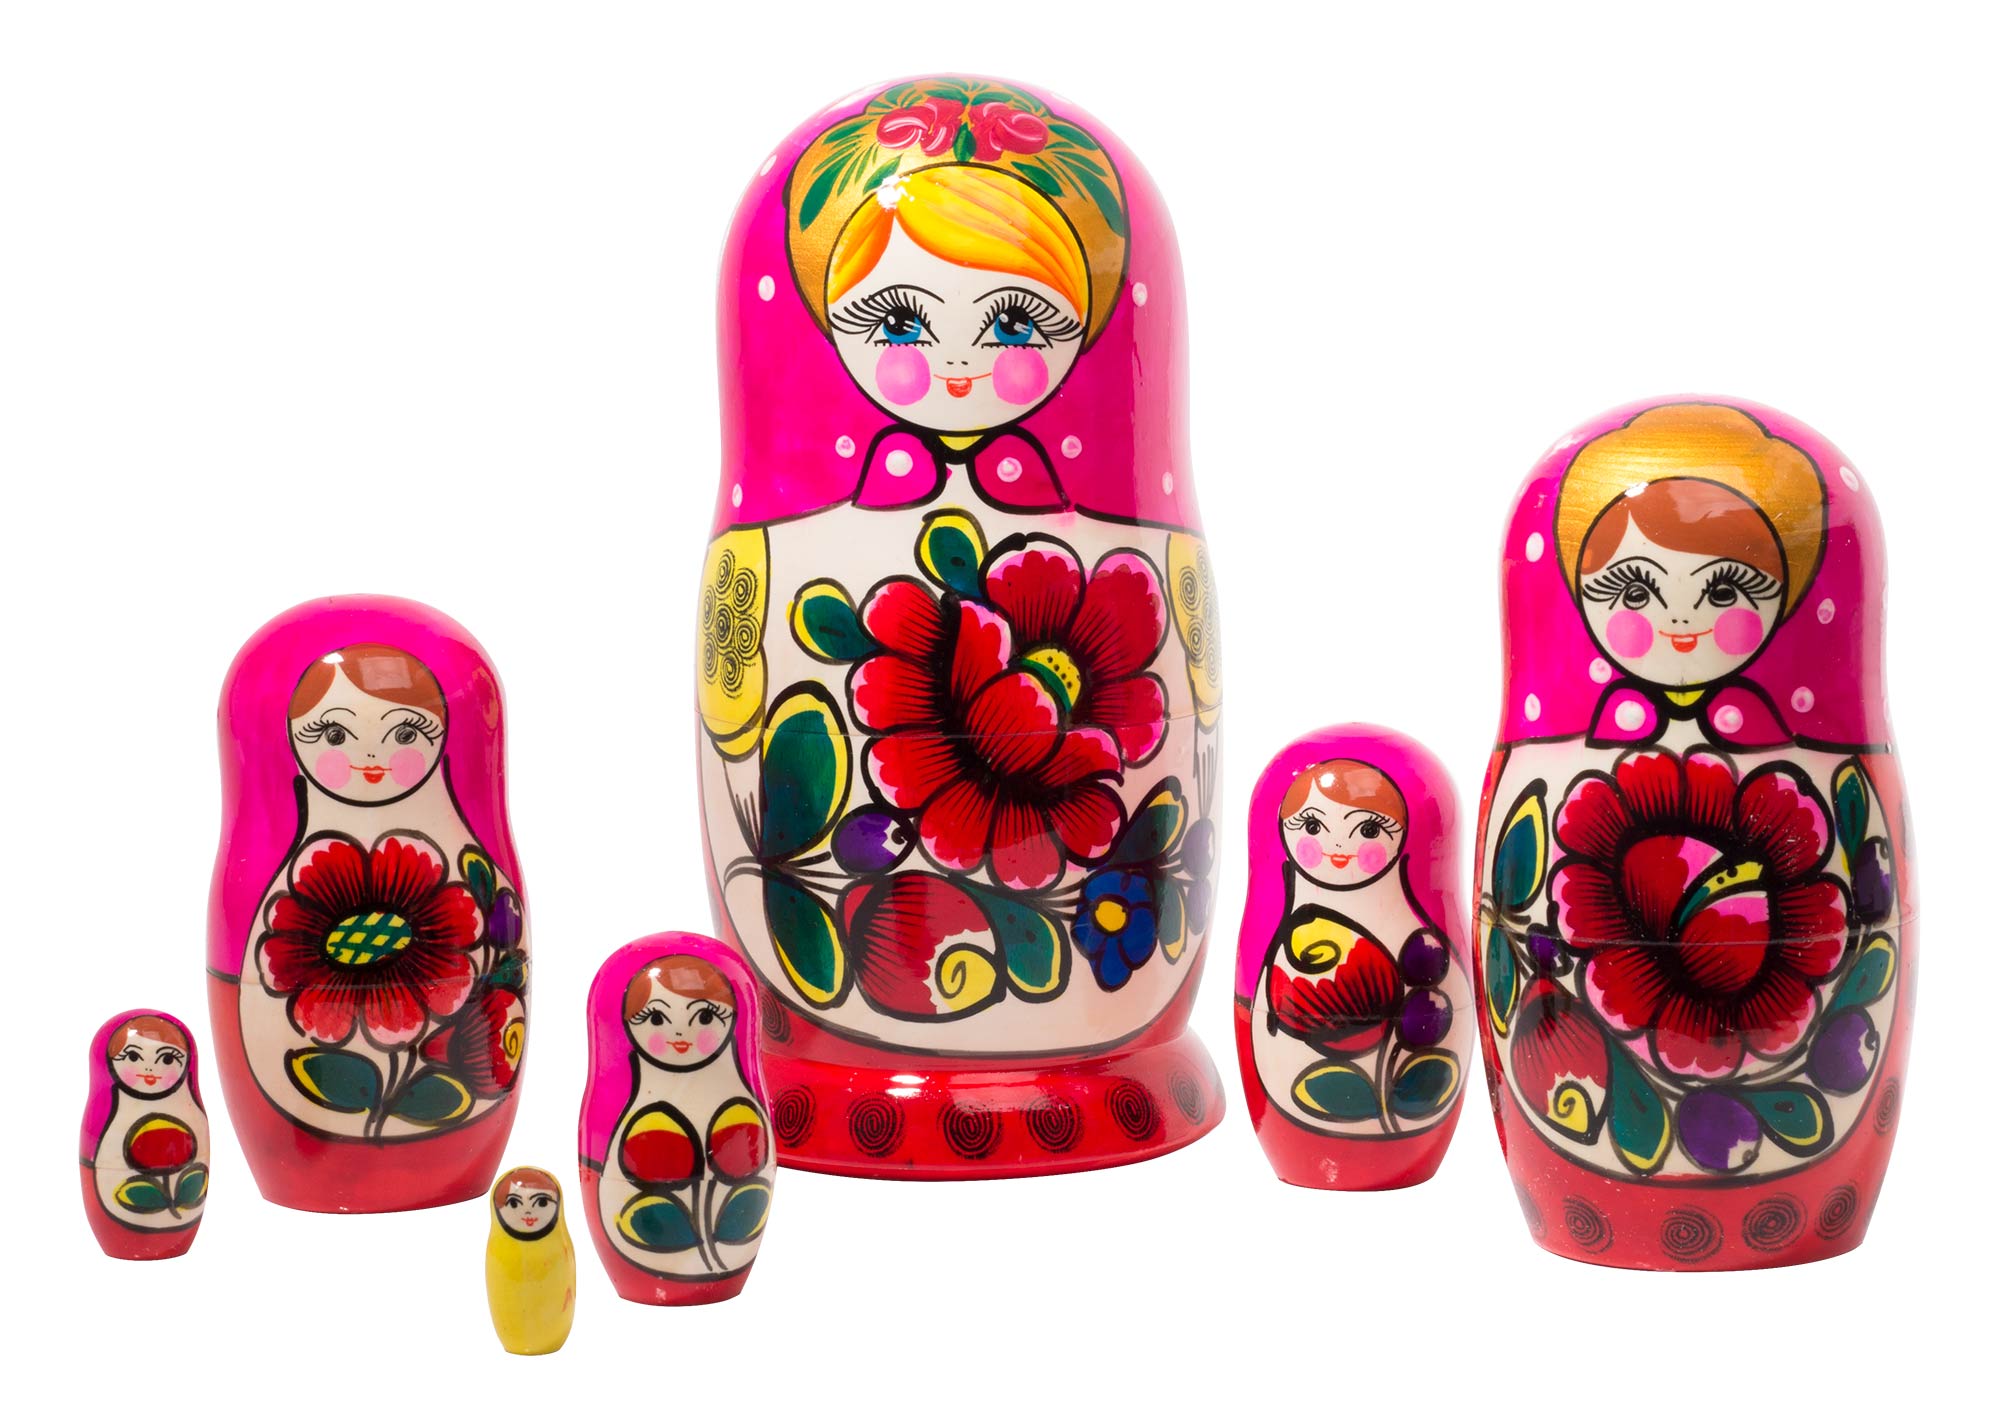 Buy Polkhovski Maidan Doll 7pc./8" at GoldenCockerel.com